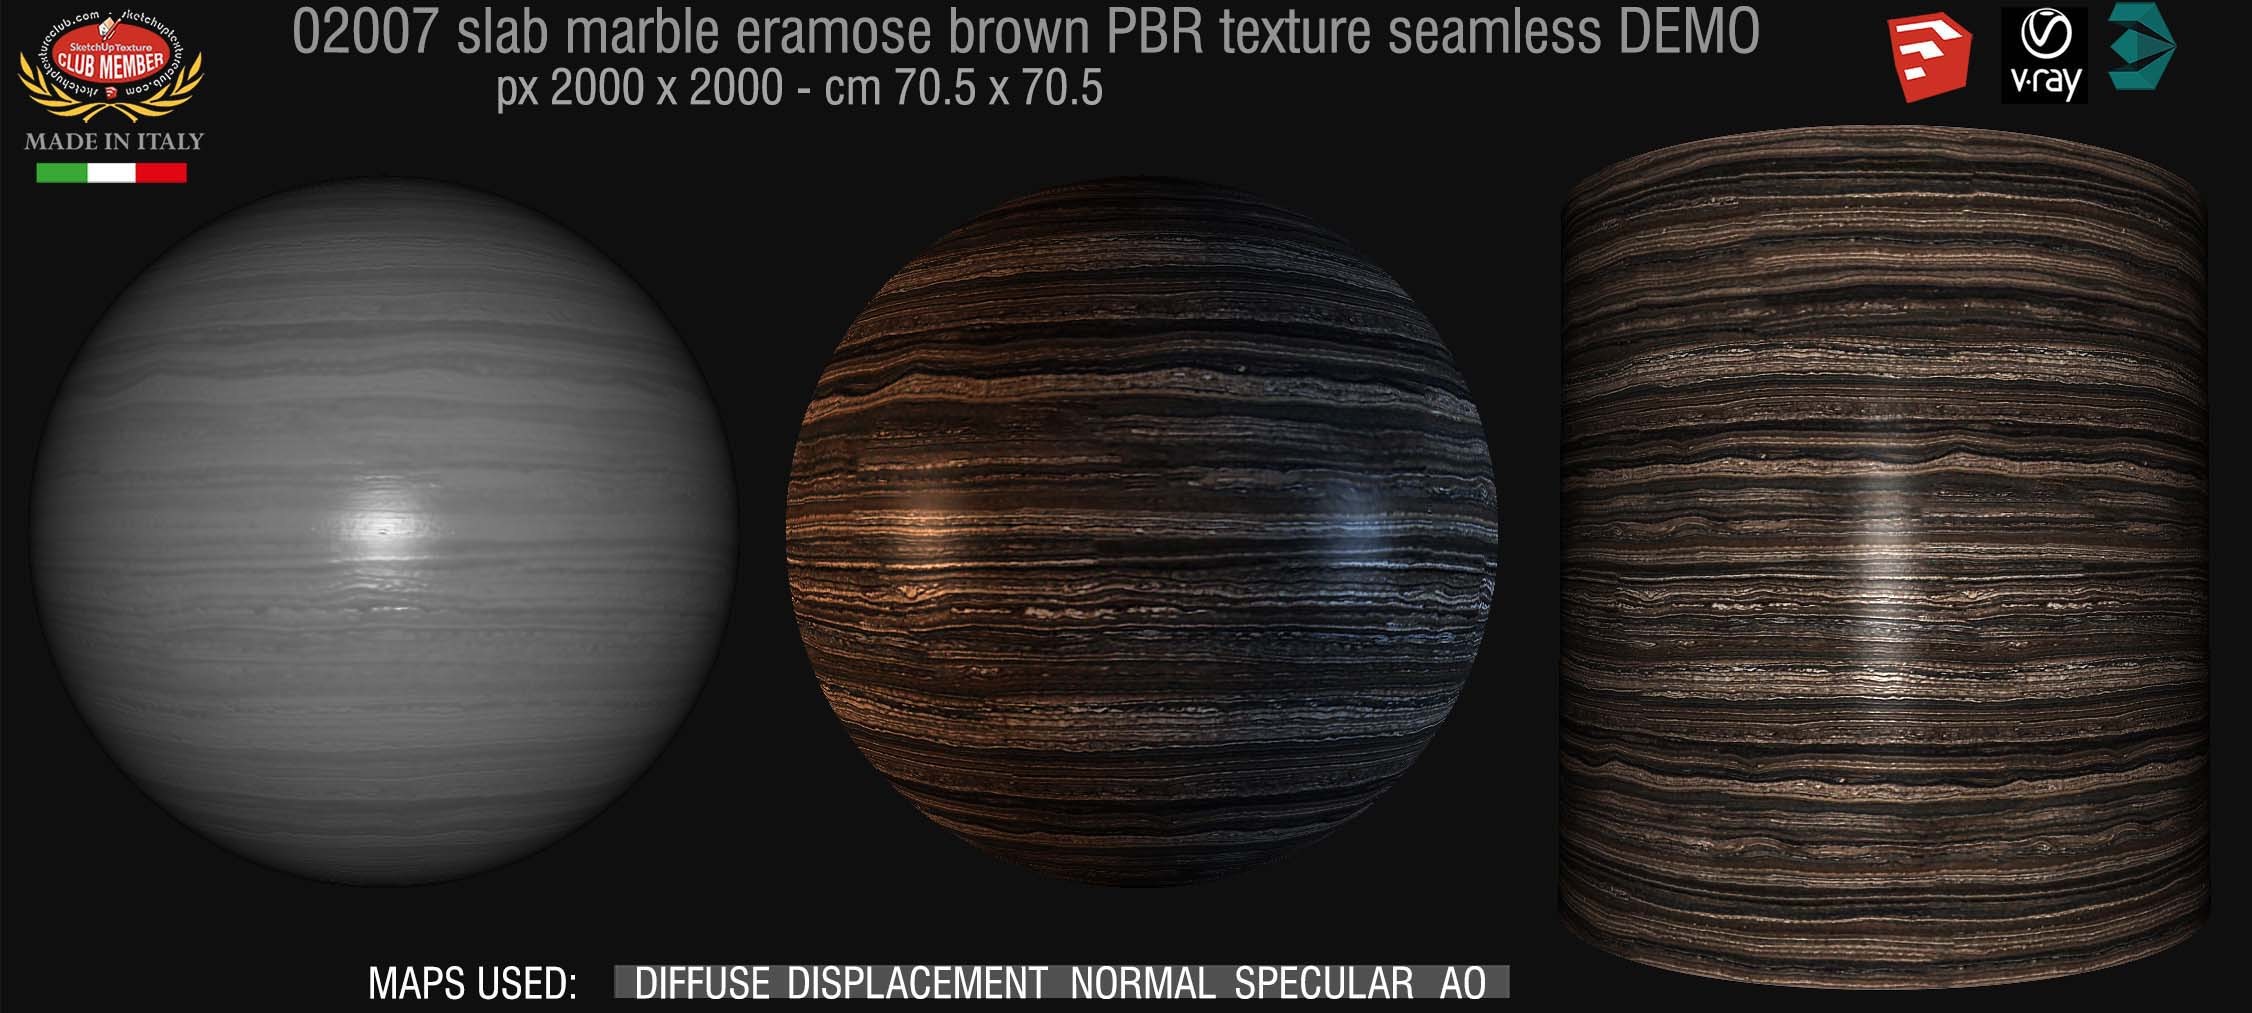 02007 slab marble eramosa brown PBR texture seamless DEMO